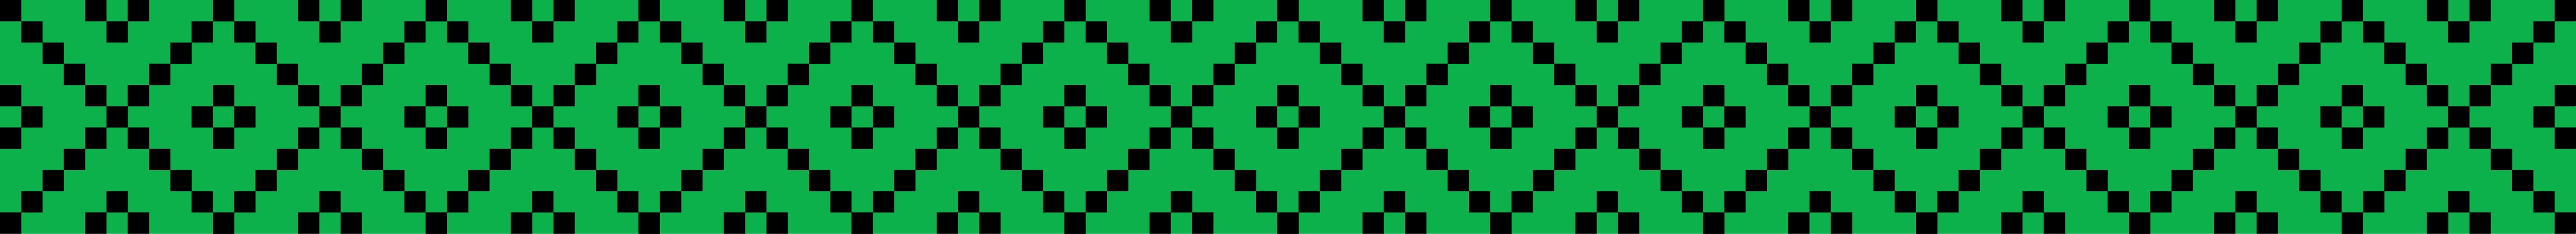 Green Pattern